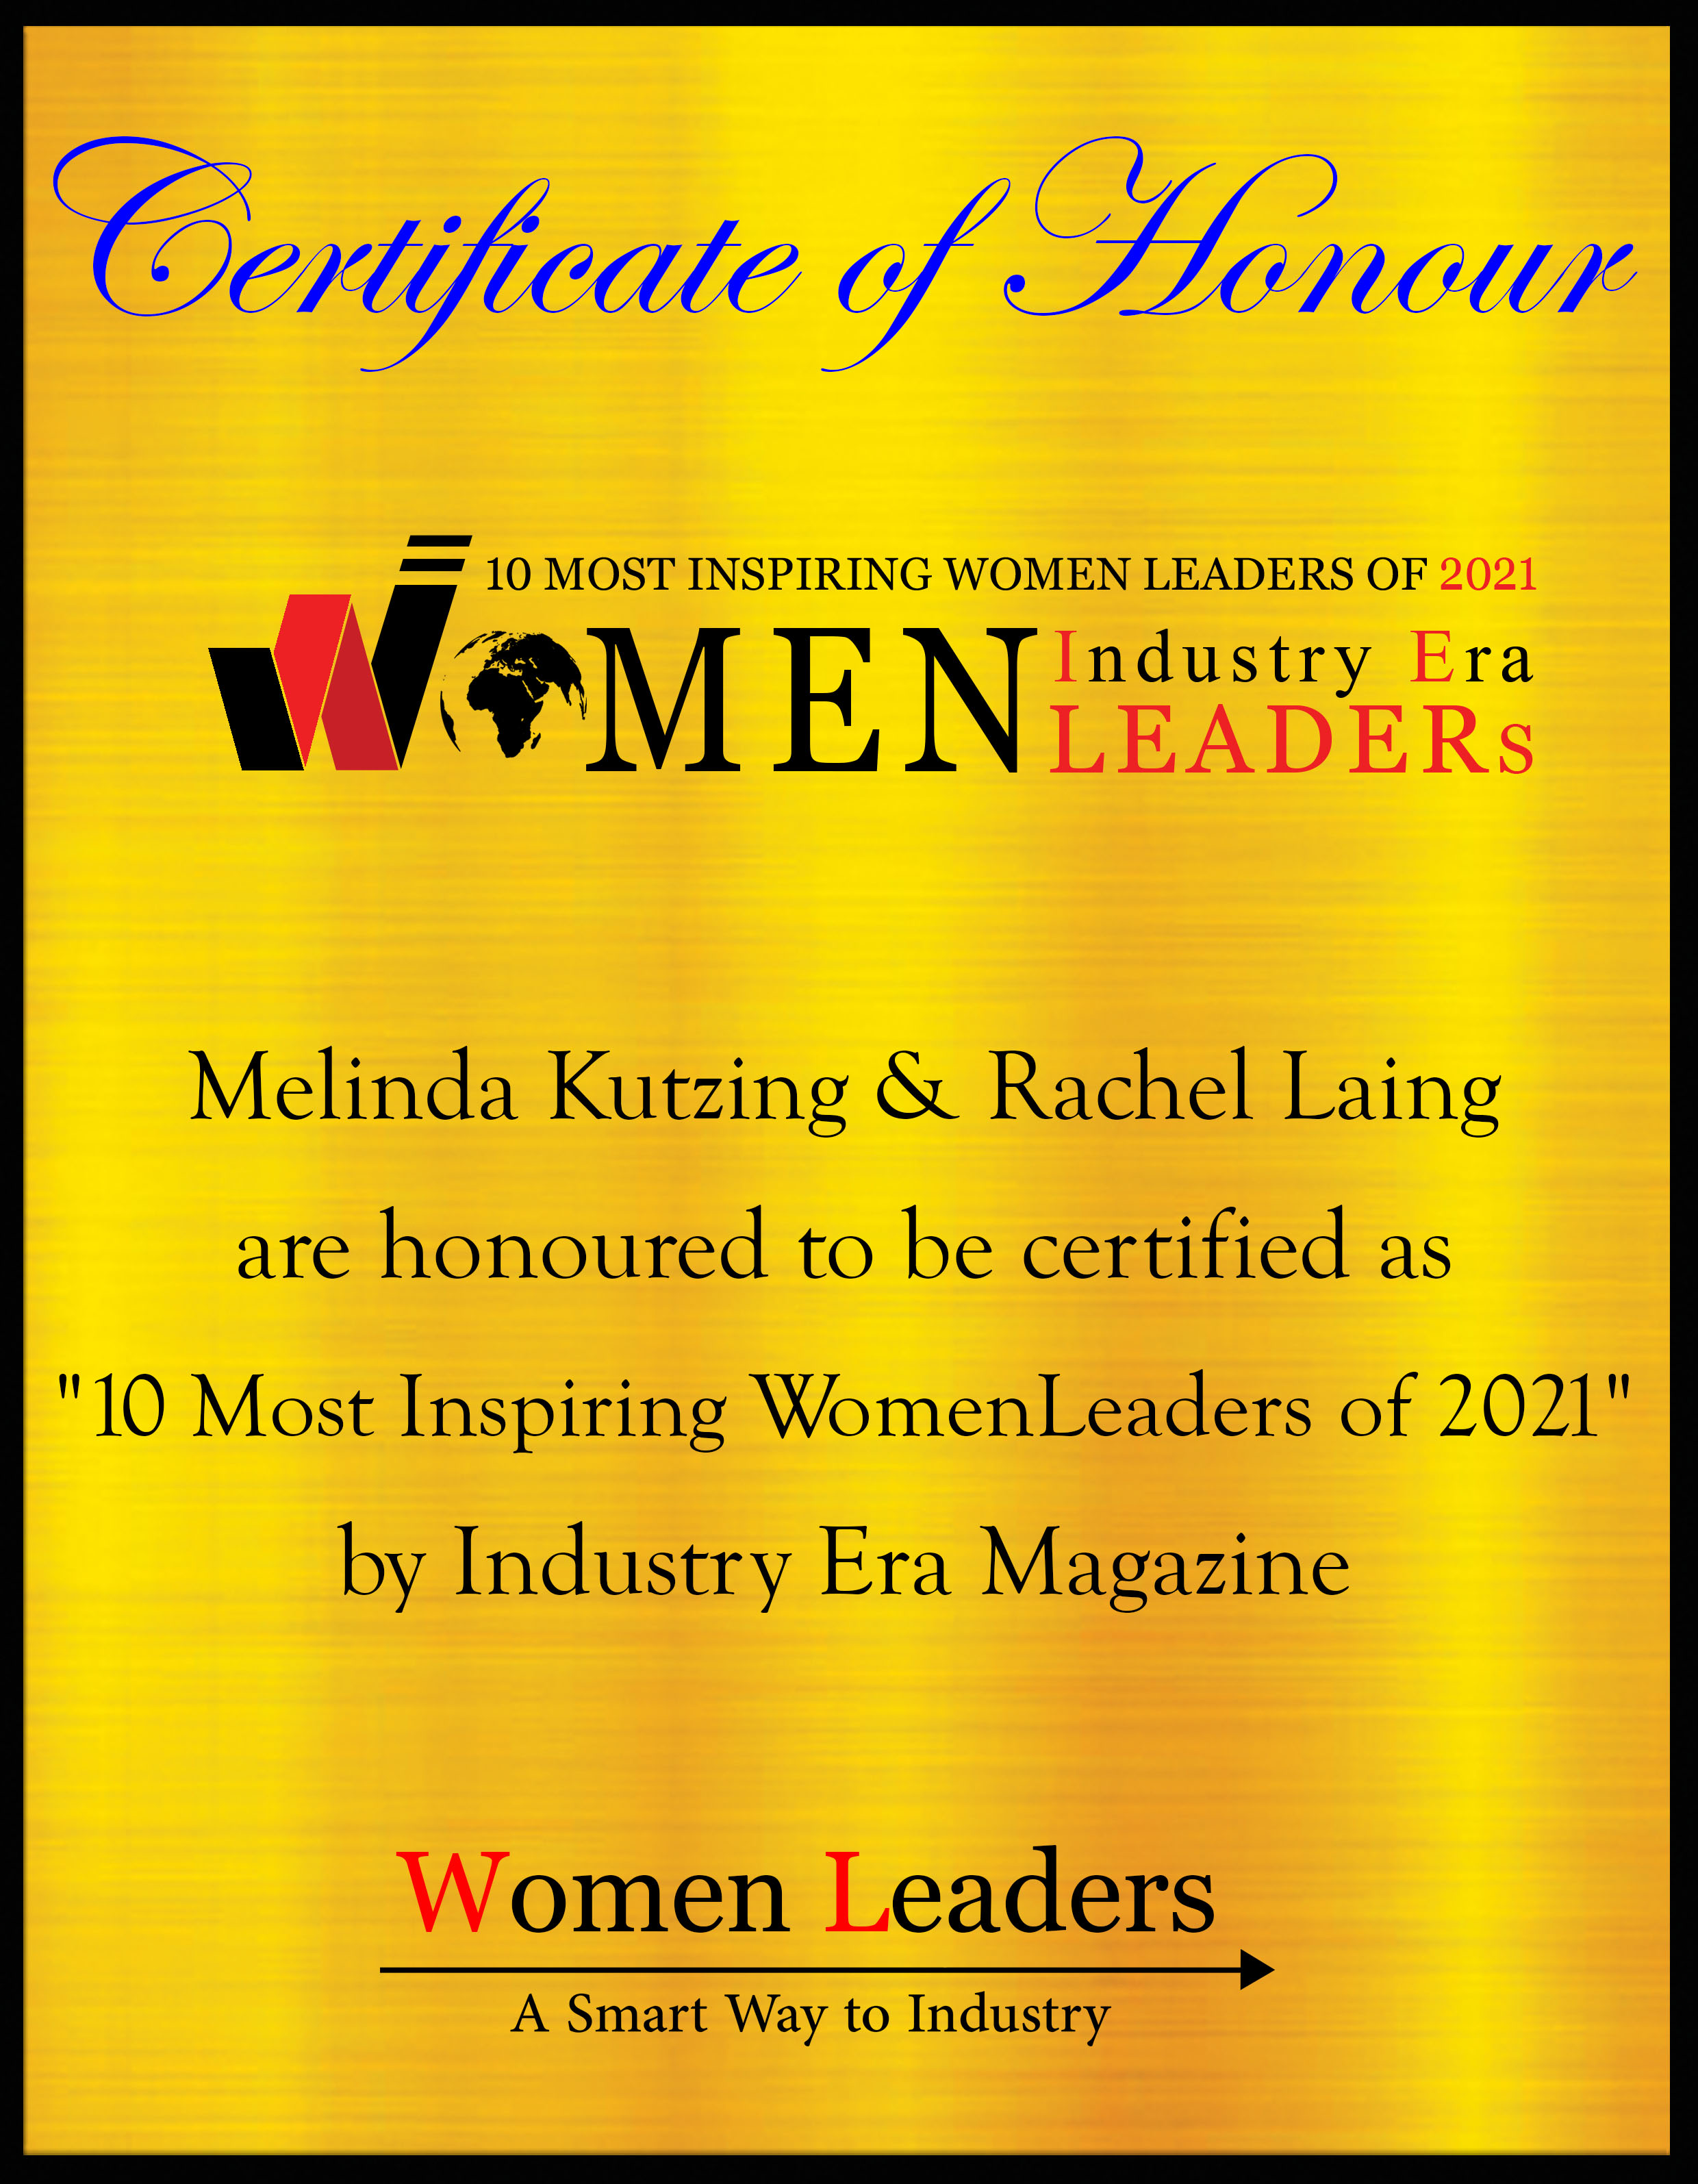 Melinda Kutzing & Rachel Laing, Managing Directors at Bionest Partners, Most Inspiring WomenLeaders of 2021